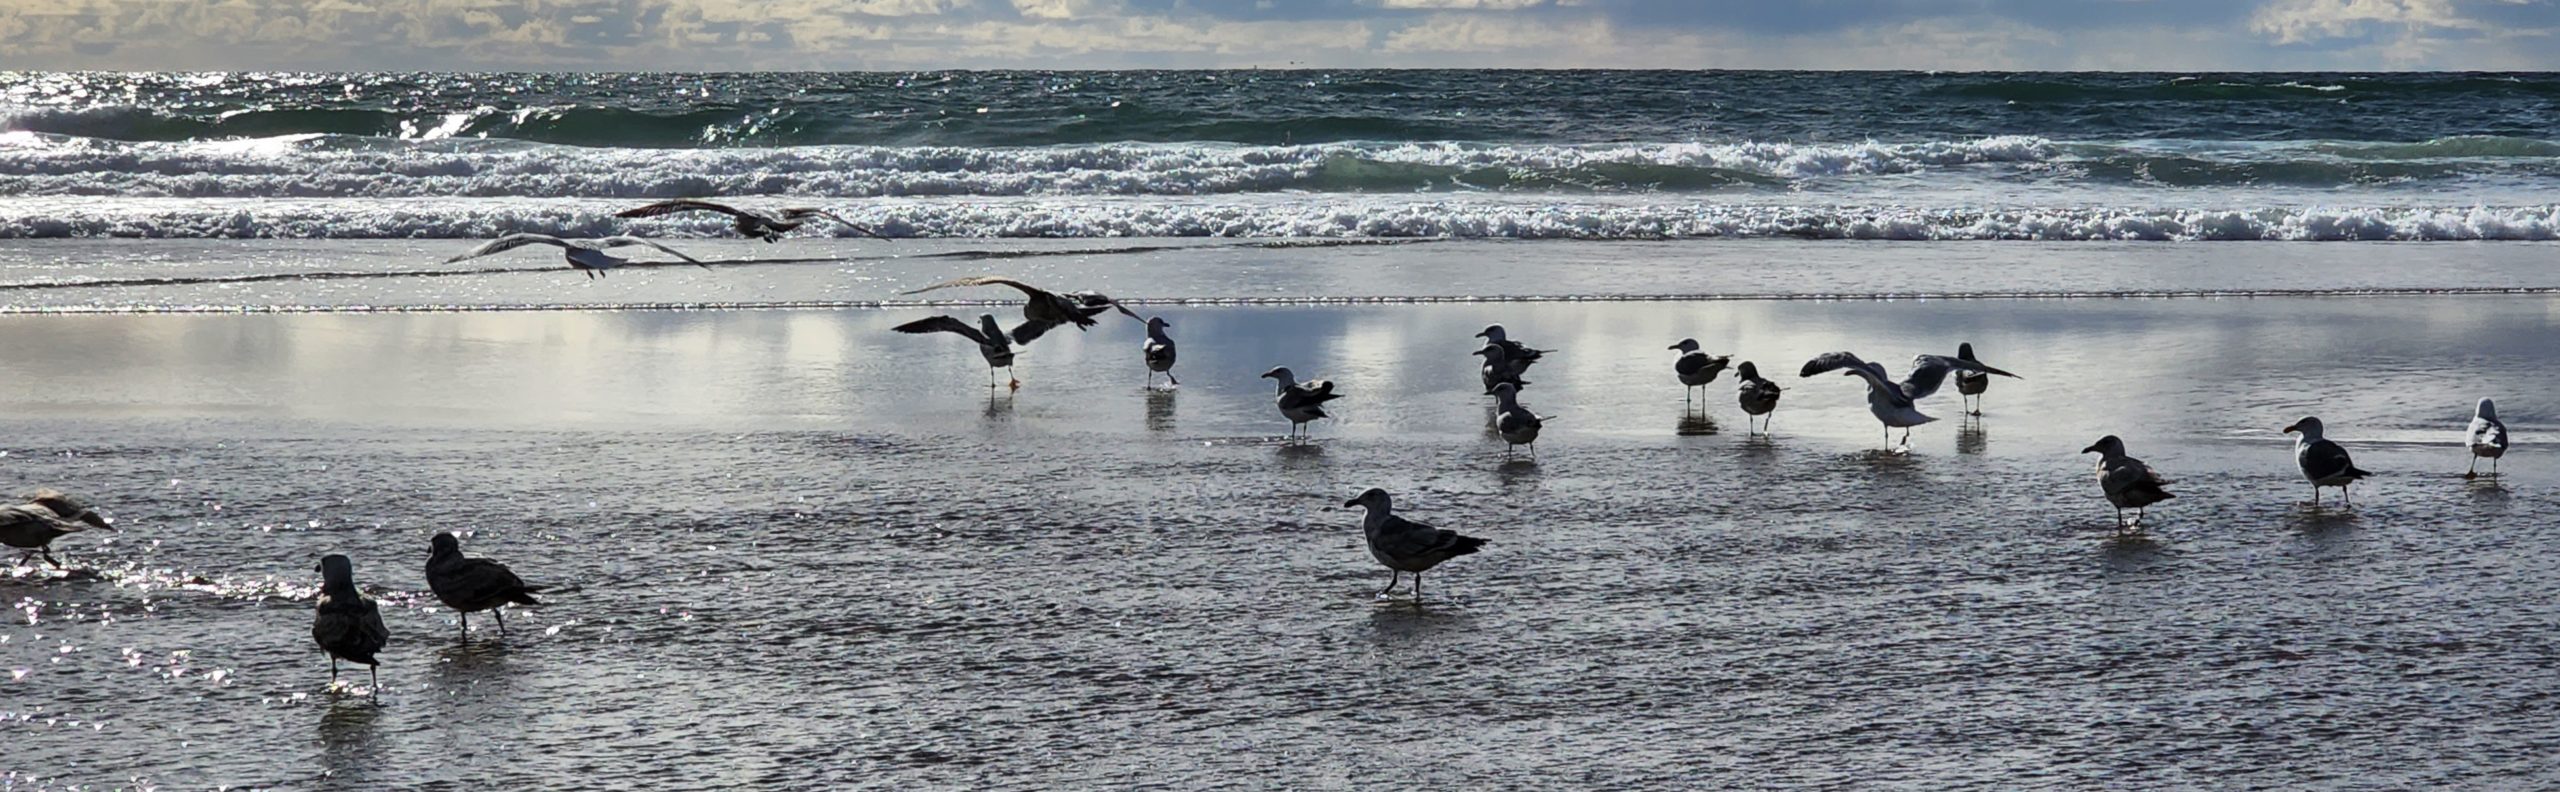 Gulls on the Beach